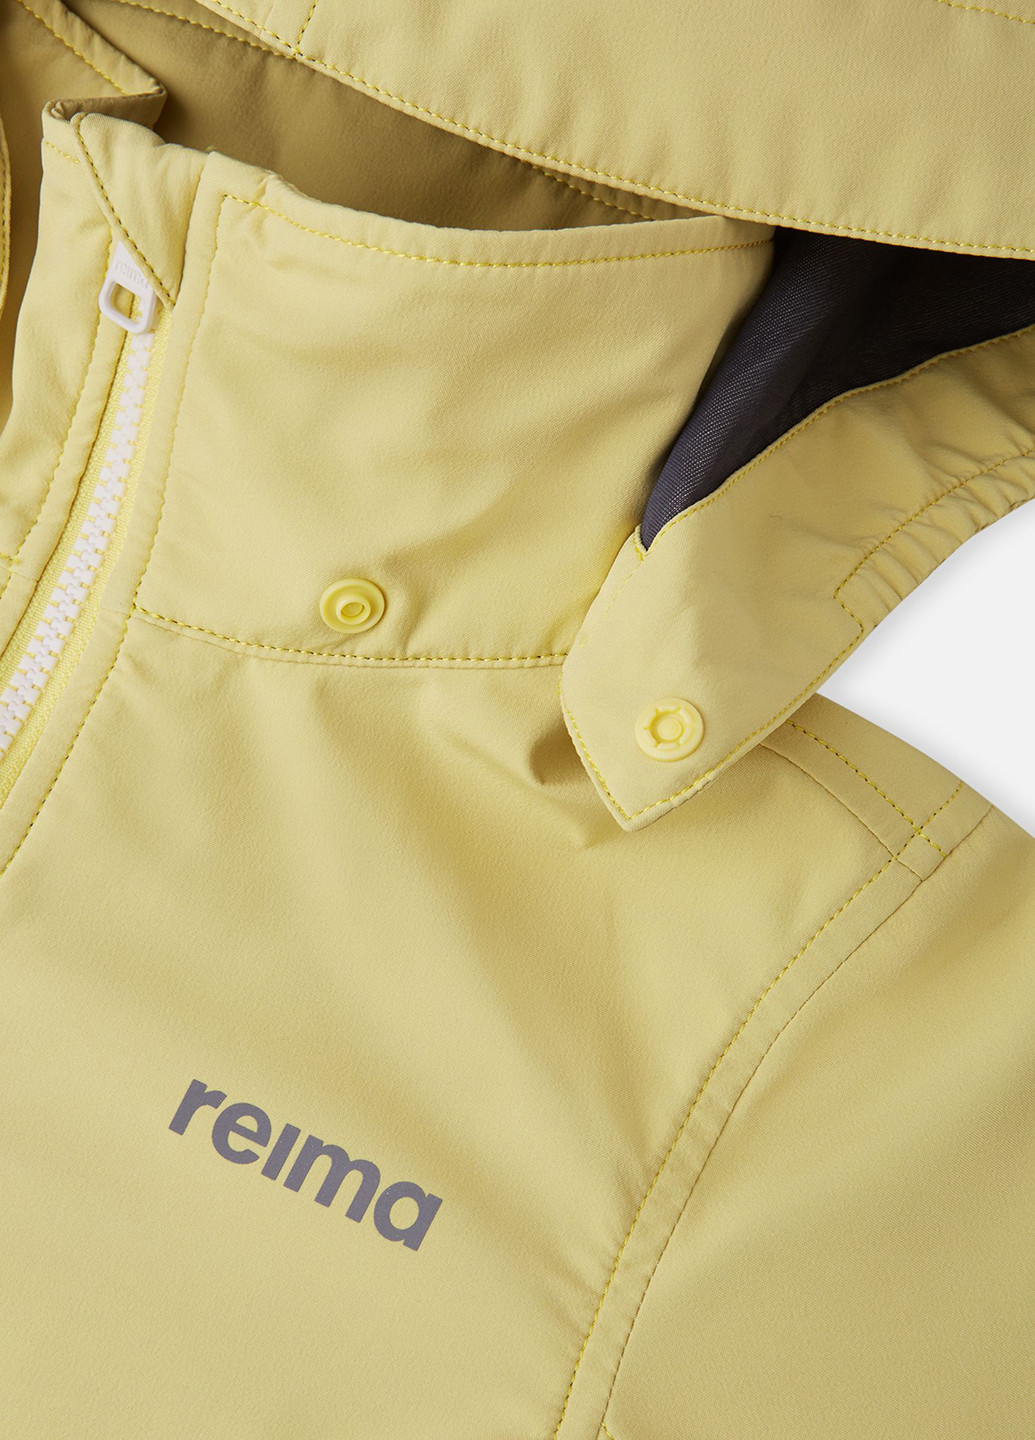 Жовта демісезонна куртка softshell Reima Kouvola